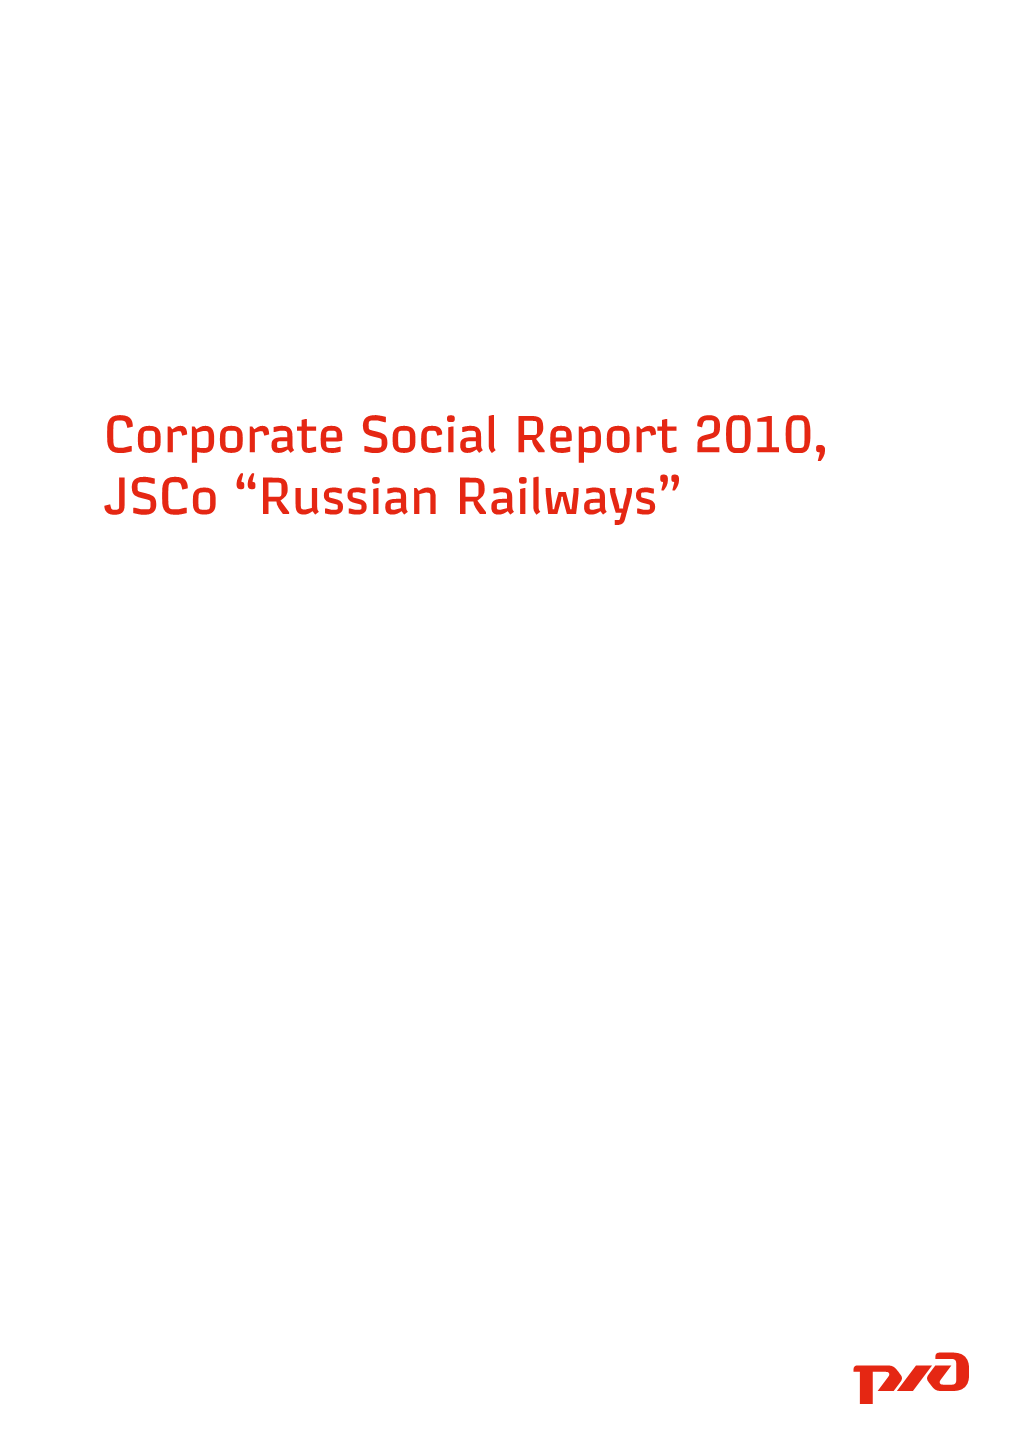 Russian Railways” Russian Railways Social Report 2010